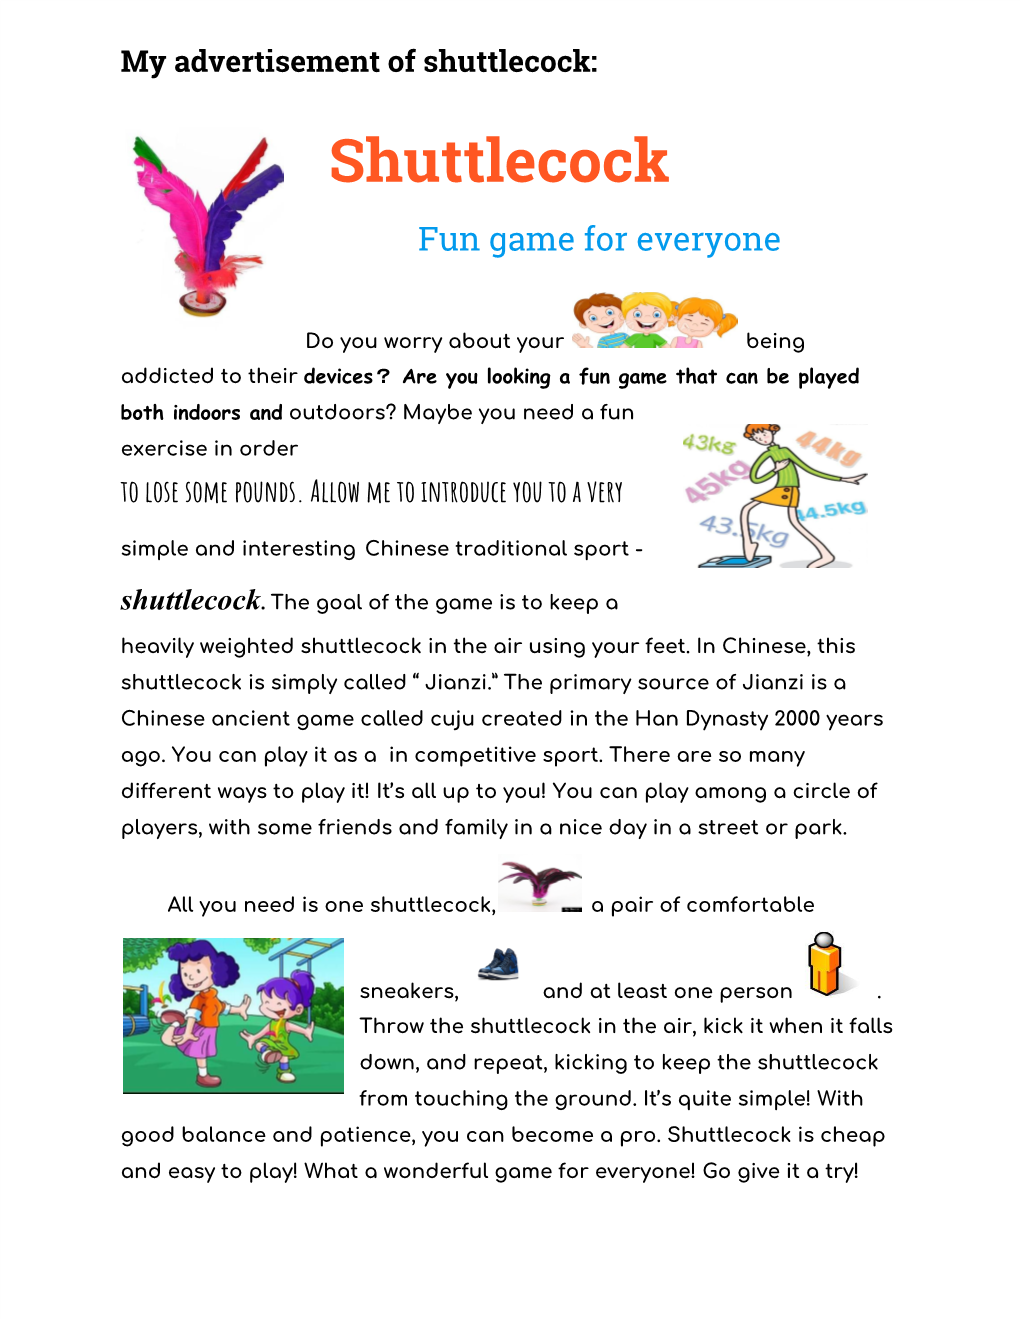 Shuttlecock: Shuttlecock Fun Game for Everyone